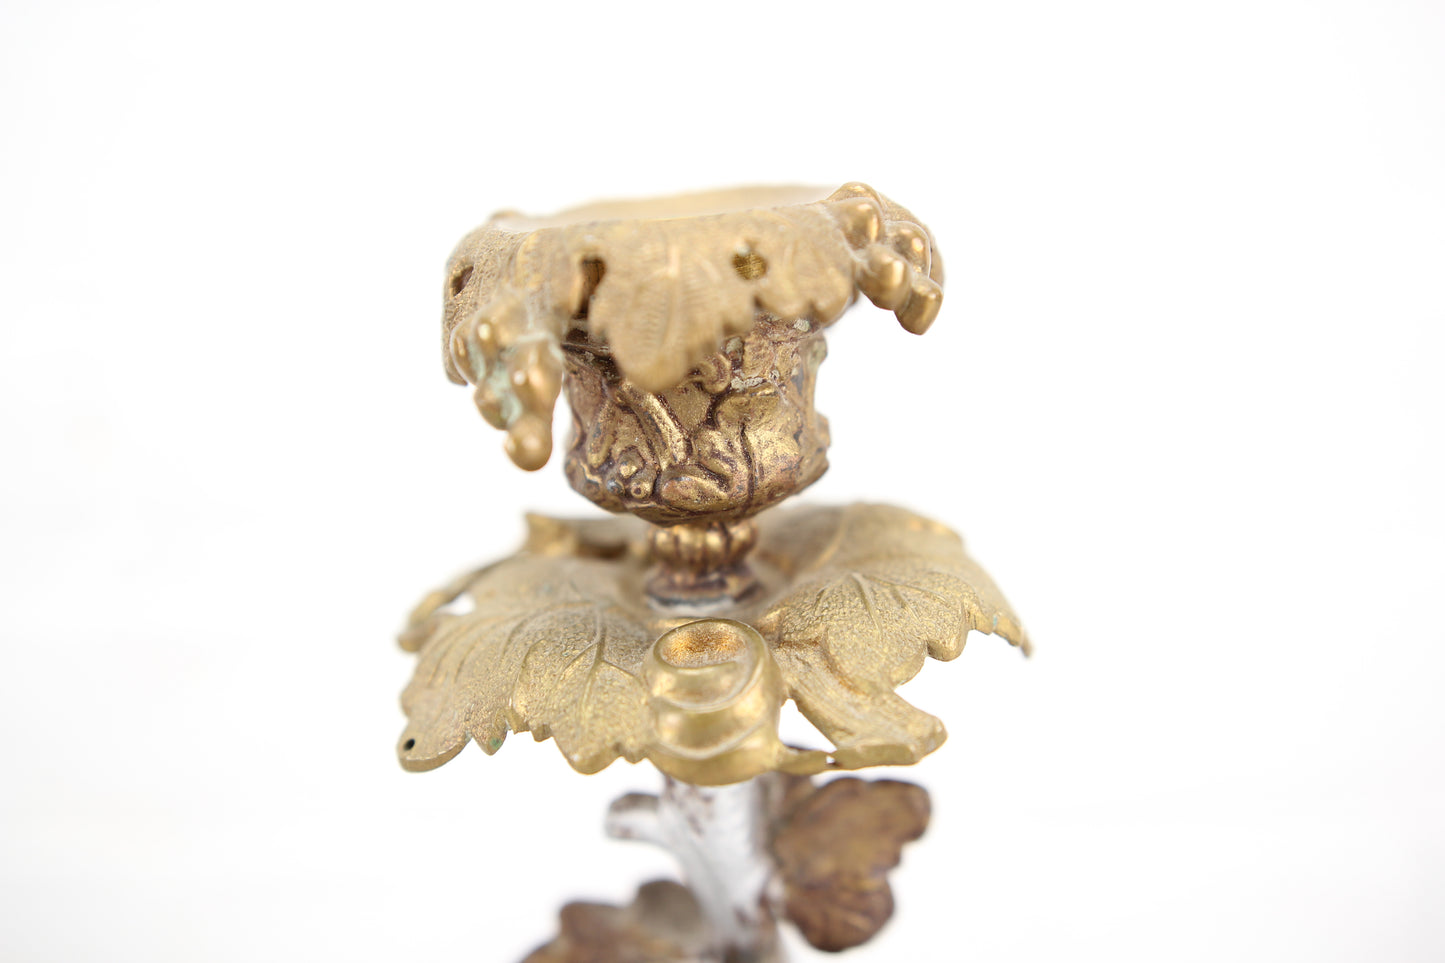 Ornate Brass Candlestick with Figural Man Holding a Bird's Nest